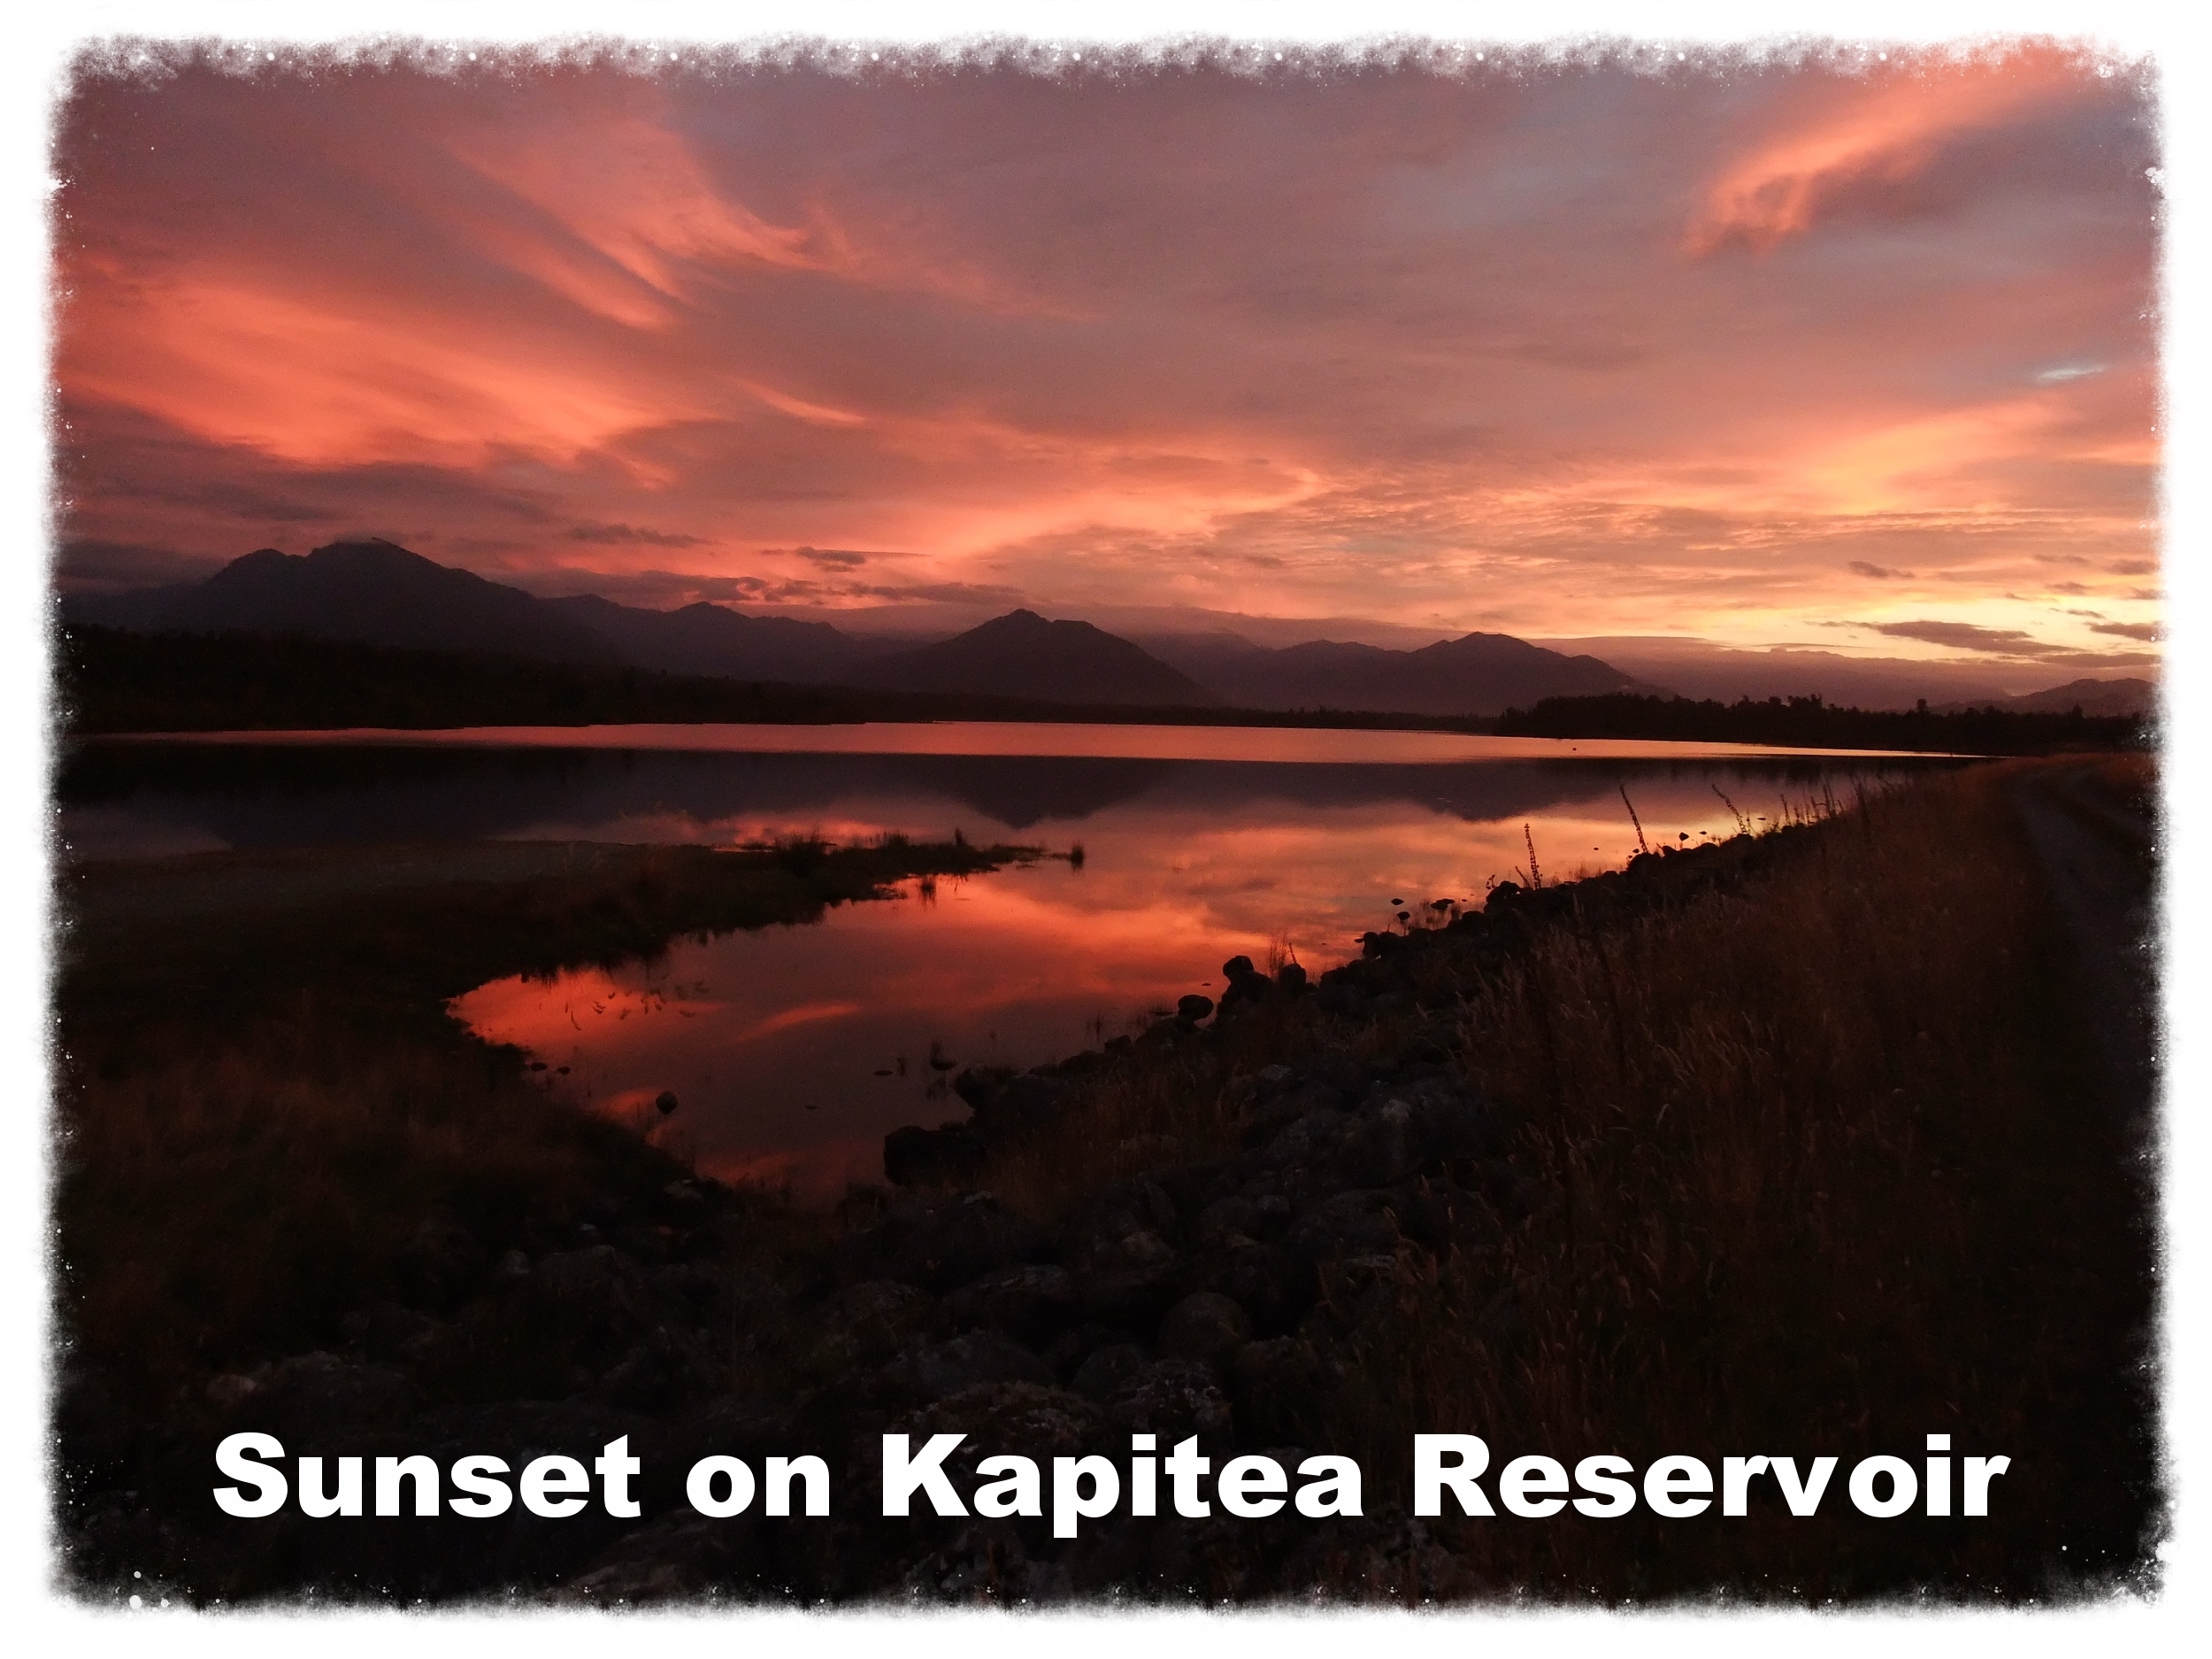 Kapitea Reservoir (Dillman's Dam), Kumara